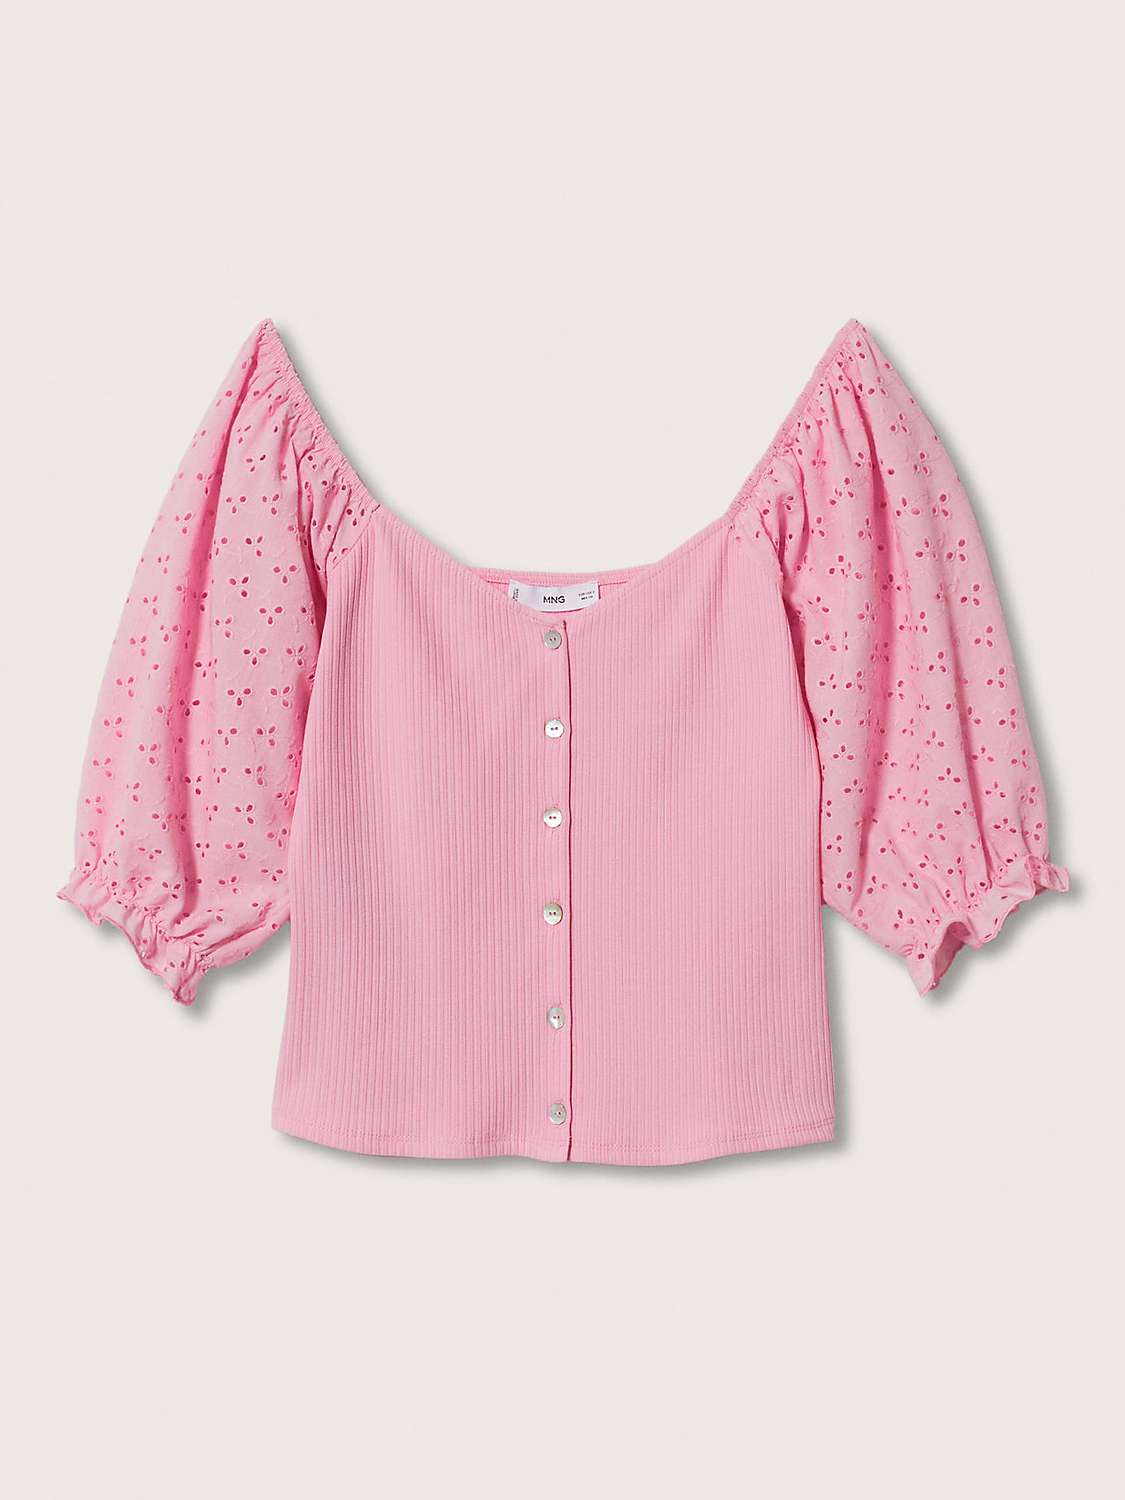 Mango Judi Embroidered Puff Sleeves Top, Pink at John Lewis & Partners